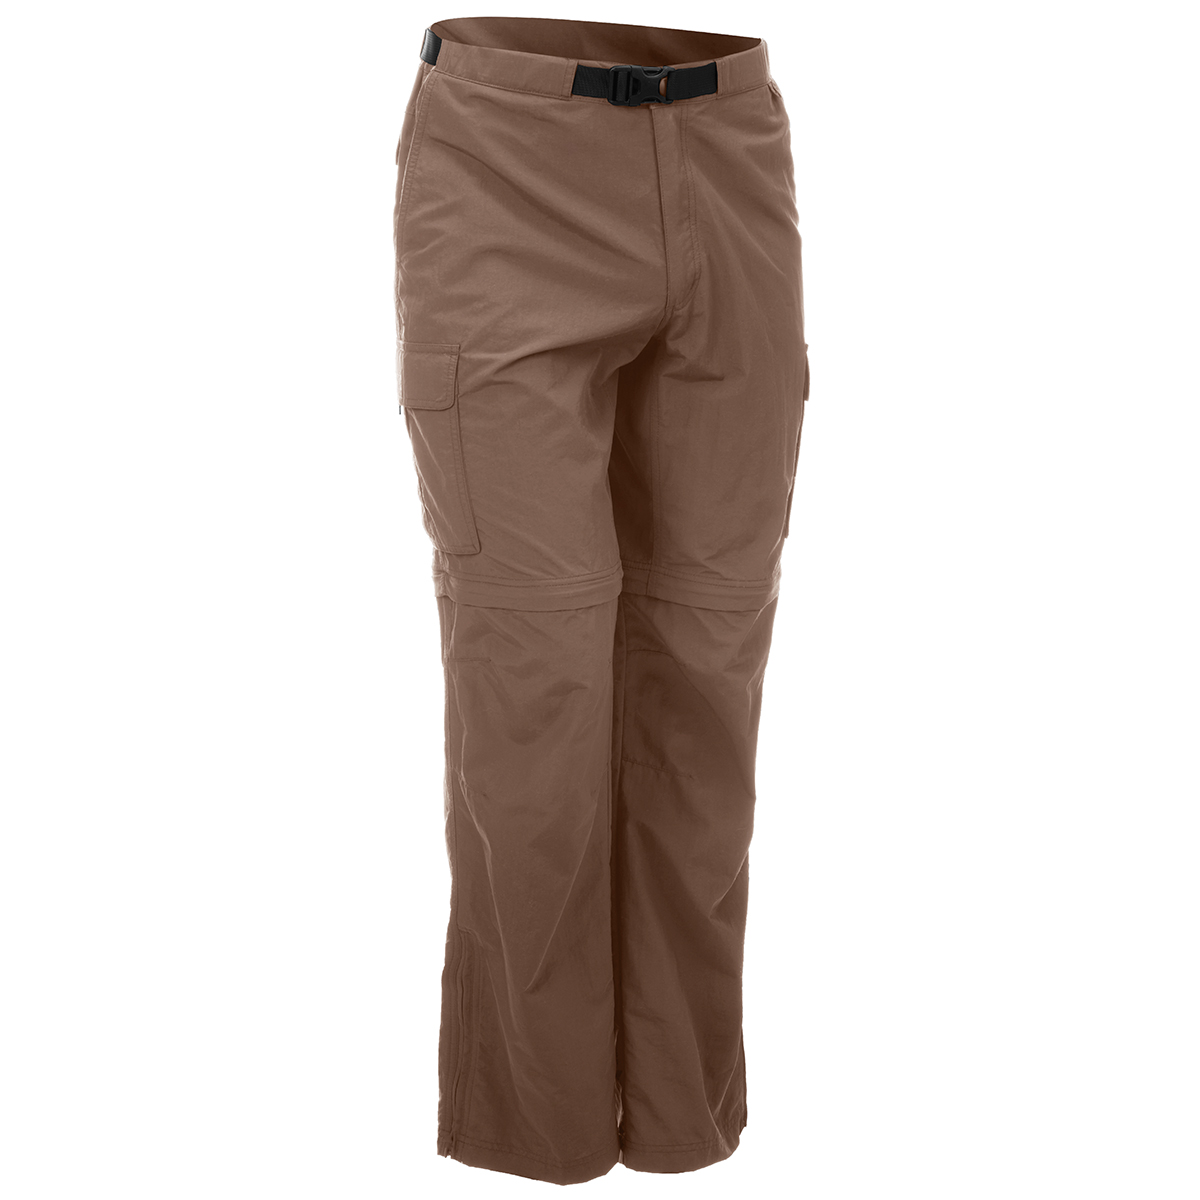 Ems Men's Camp Cargo Zip-Off Pants - White, 36/30